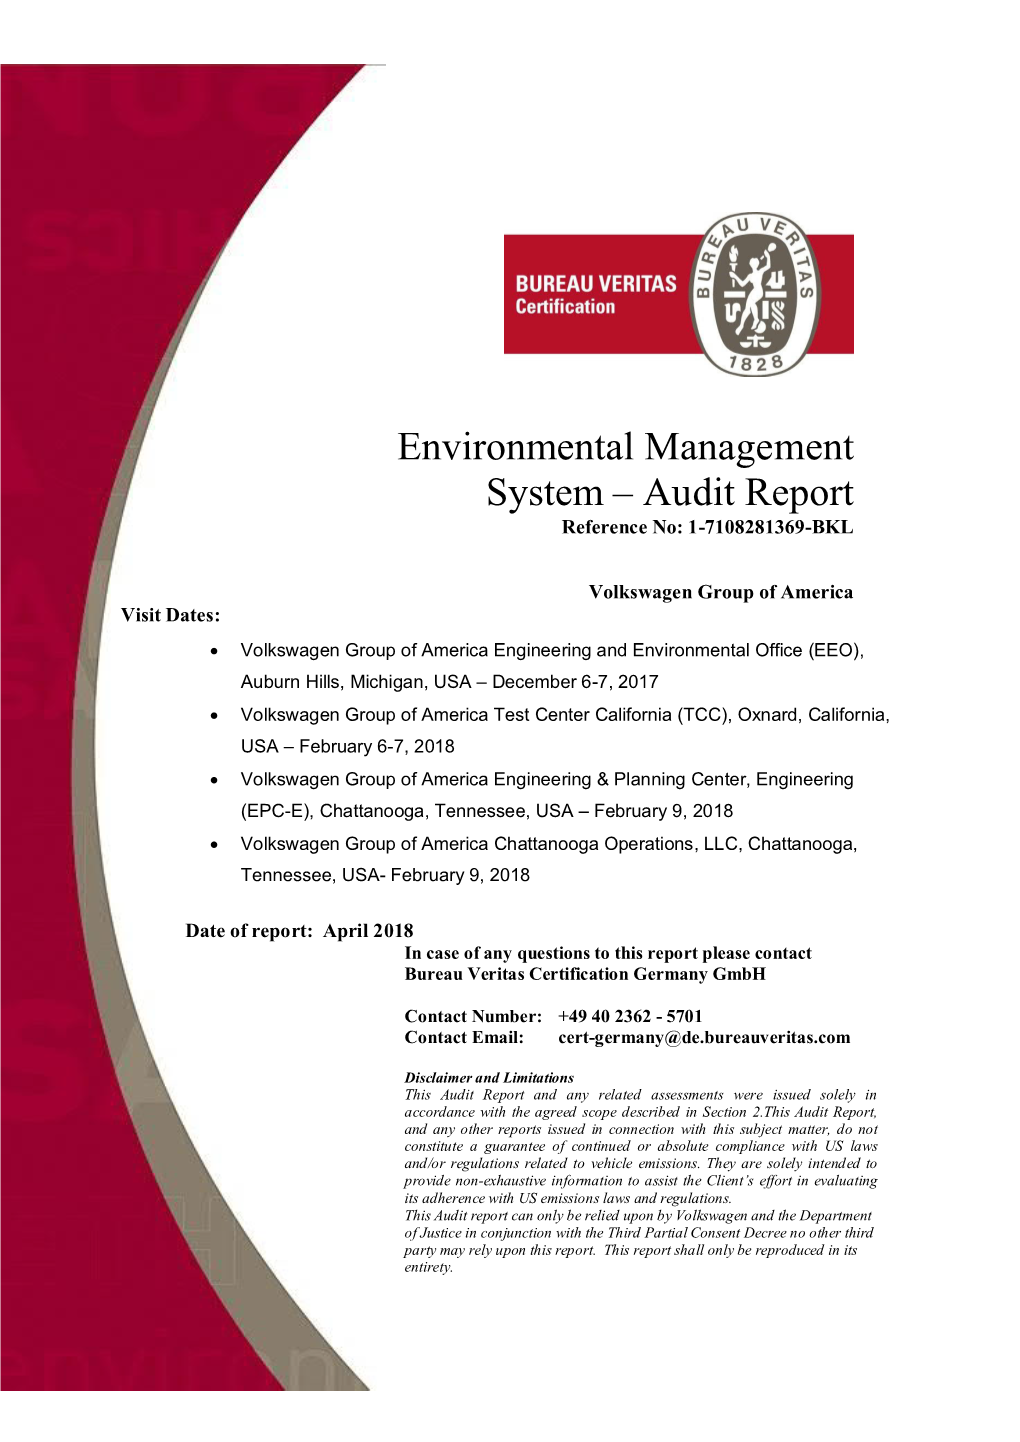 Environmental Management System – Audit Report Reference No: 1-7108281369-BKL